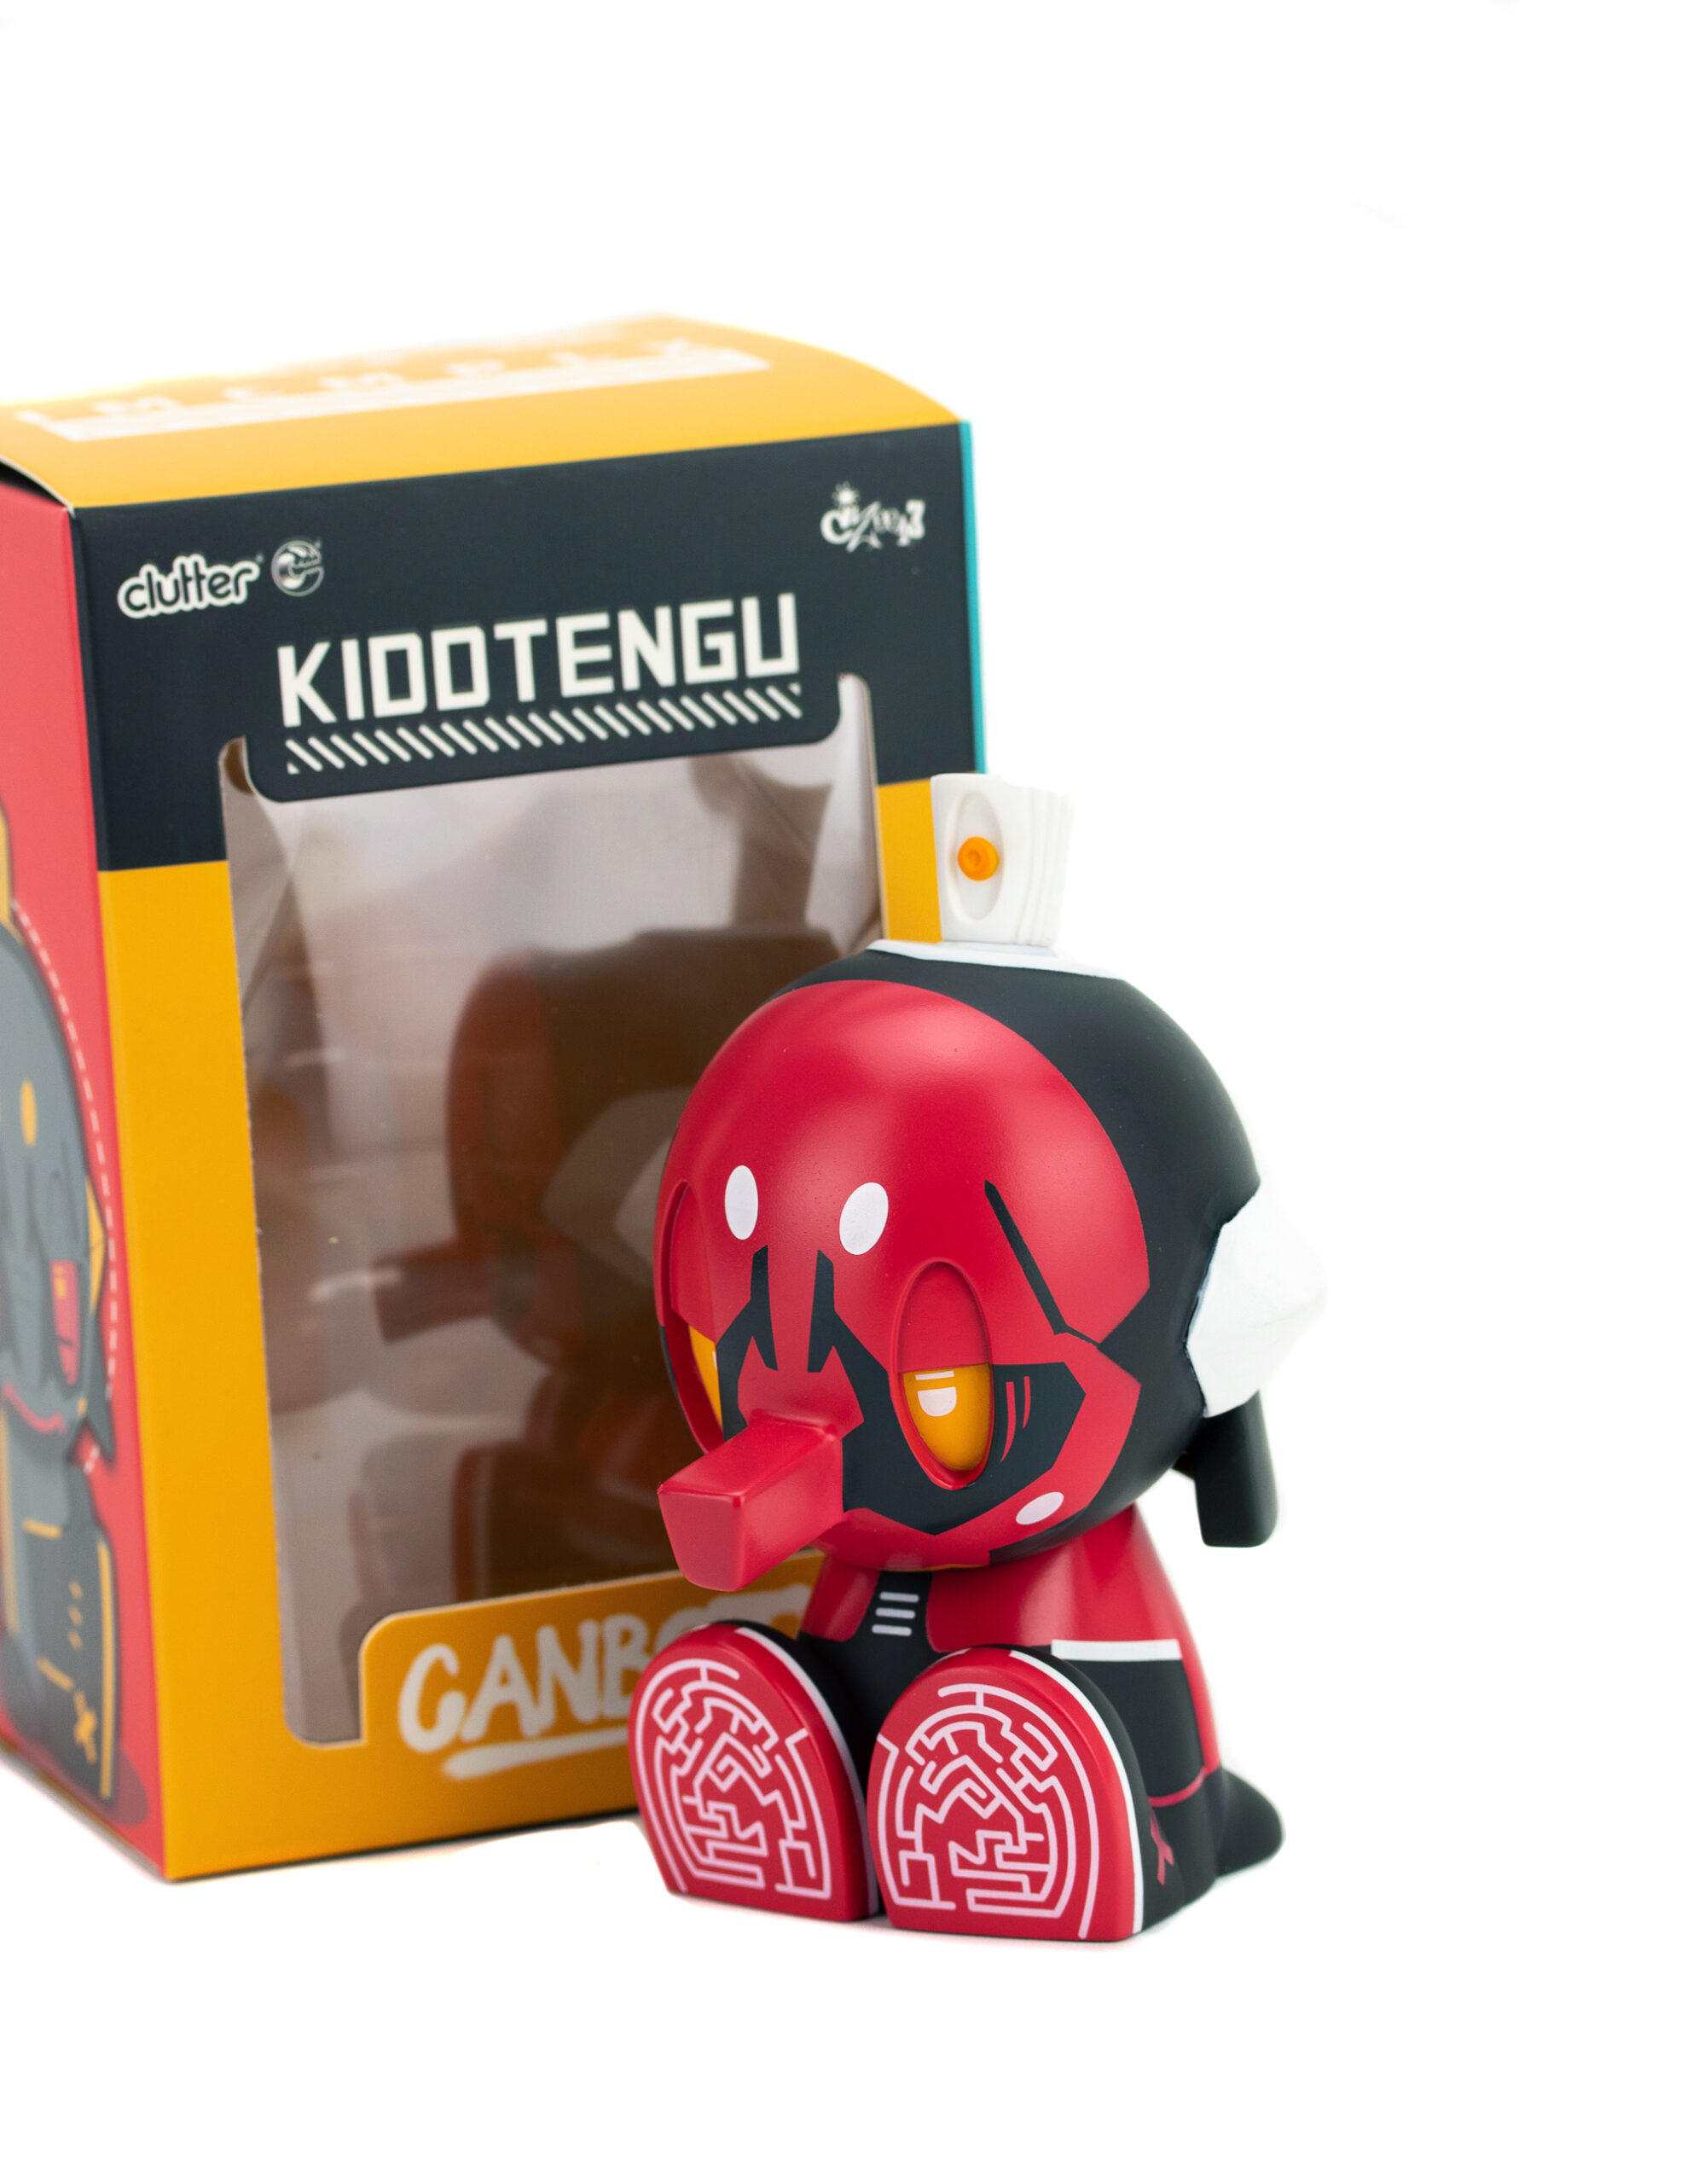 The Kidd Tengu Red 5oz Canbot